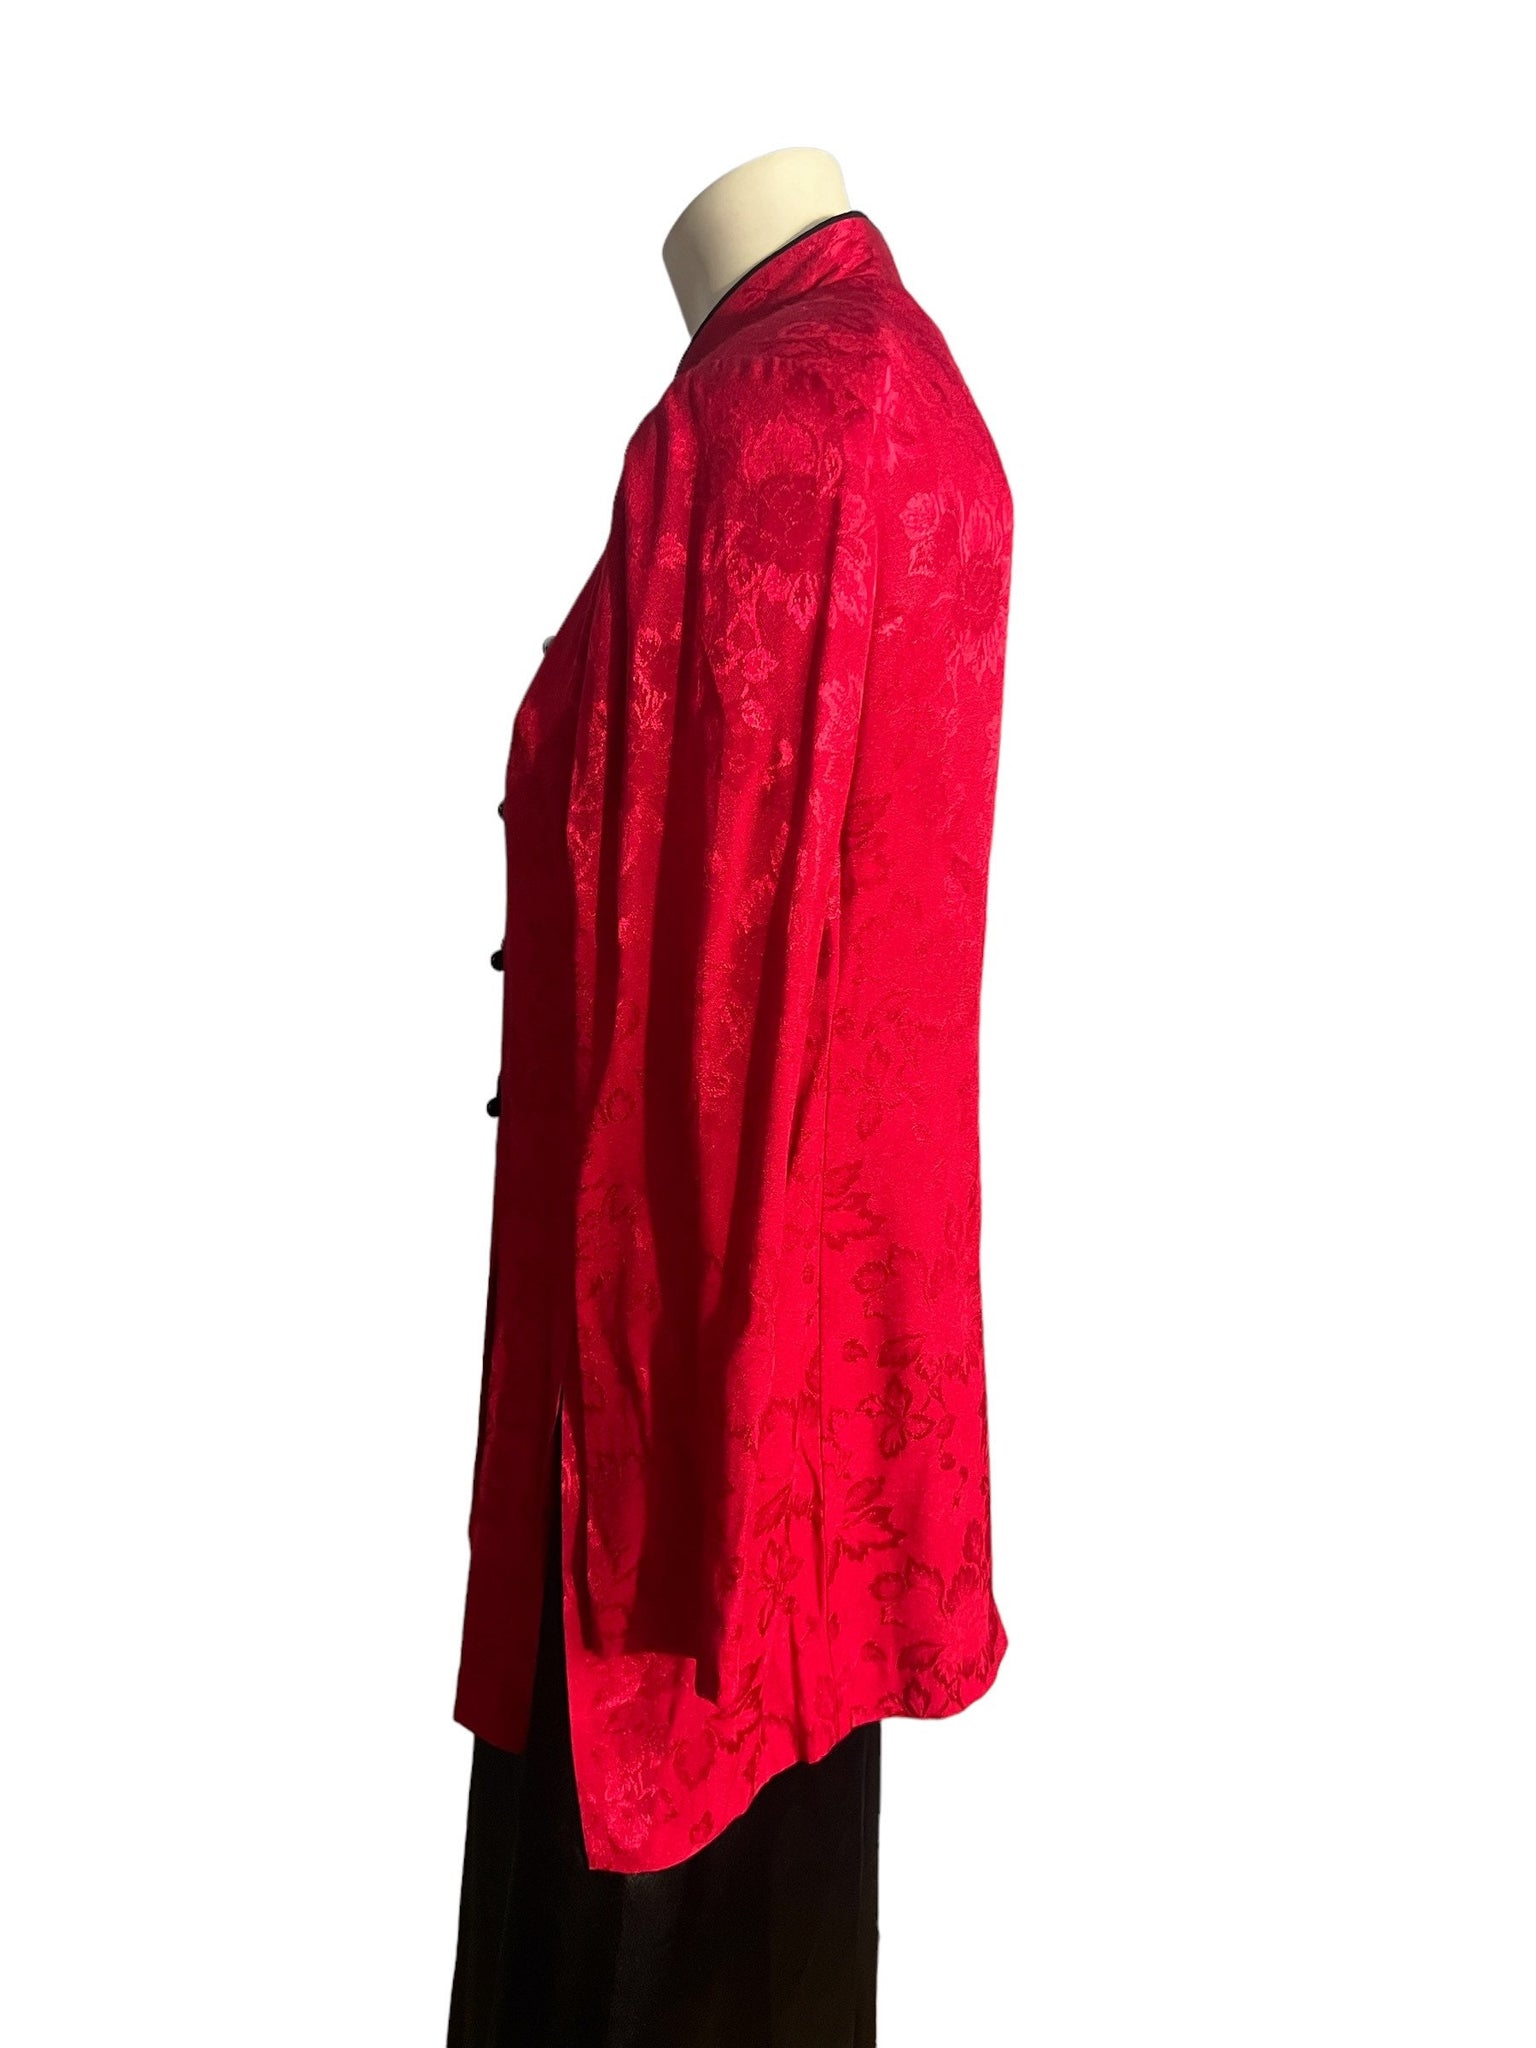 Vintage 80's red & black Chinese jacket 8 M